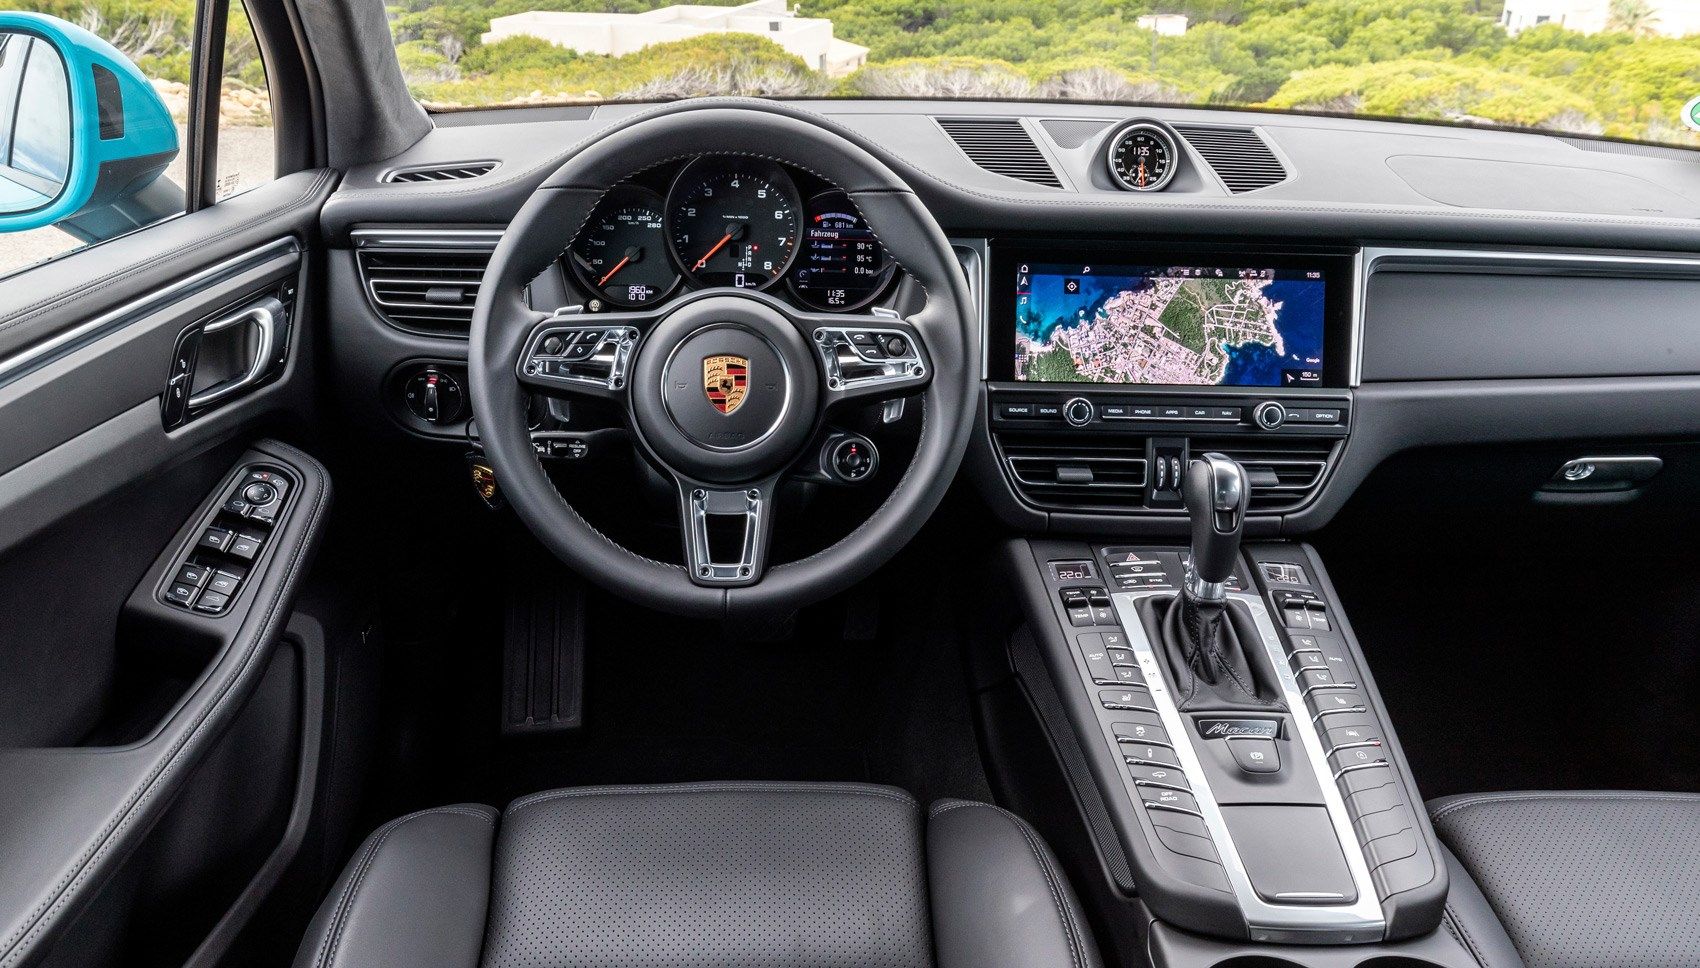 Porsche Macan 2018 interior | Porsche macan gts, Porsche macan interior,  Porsche